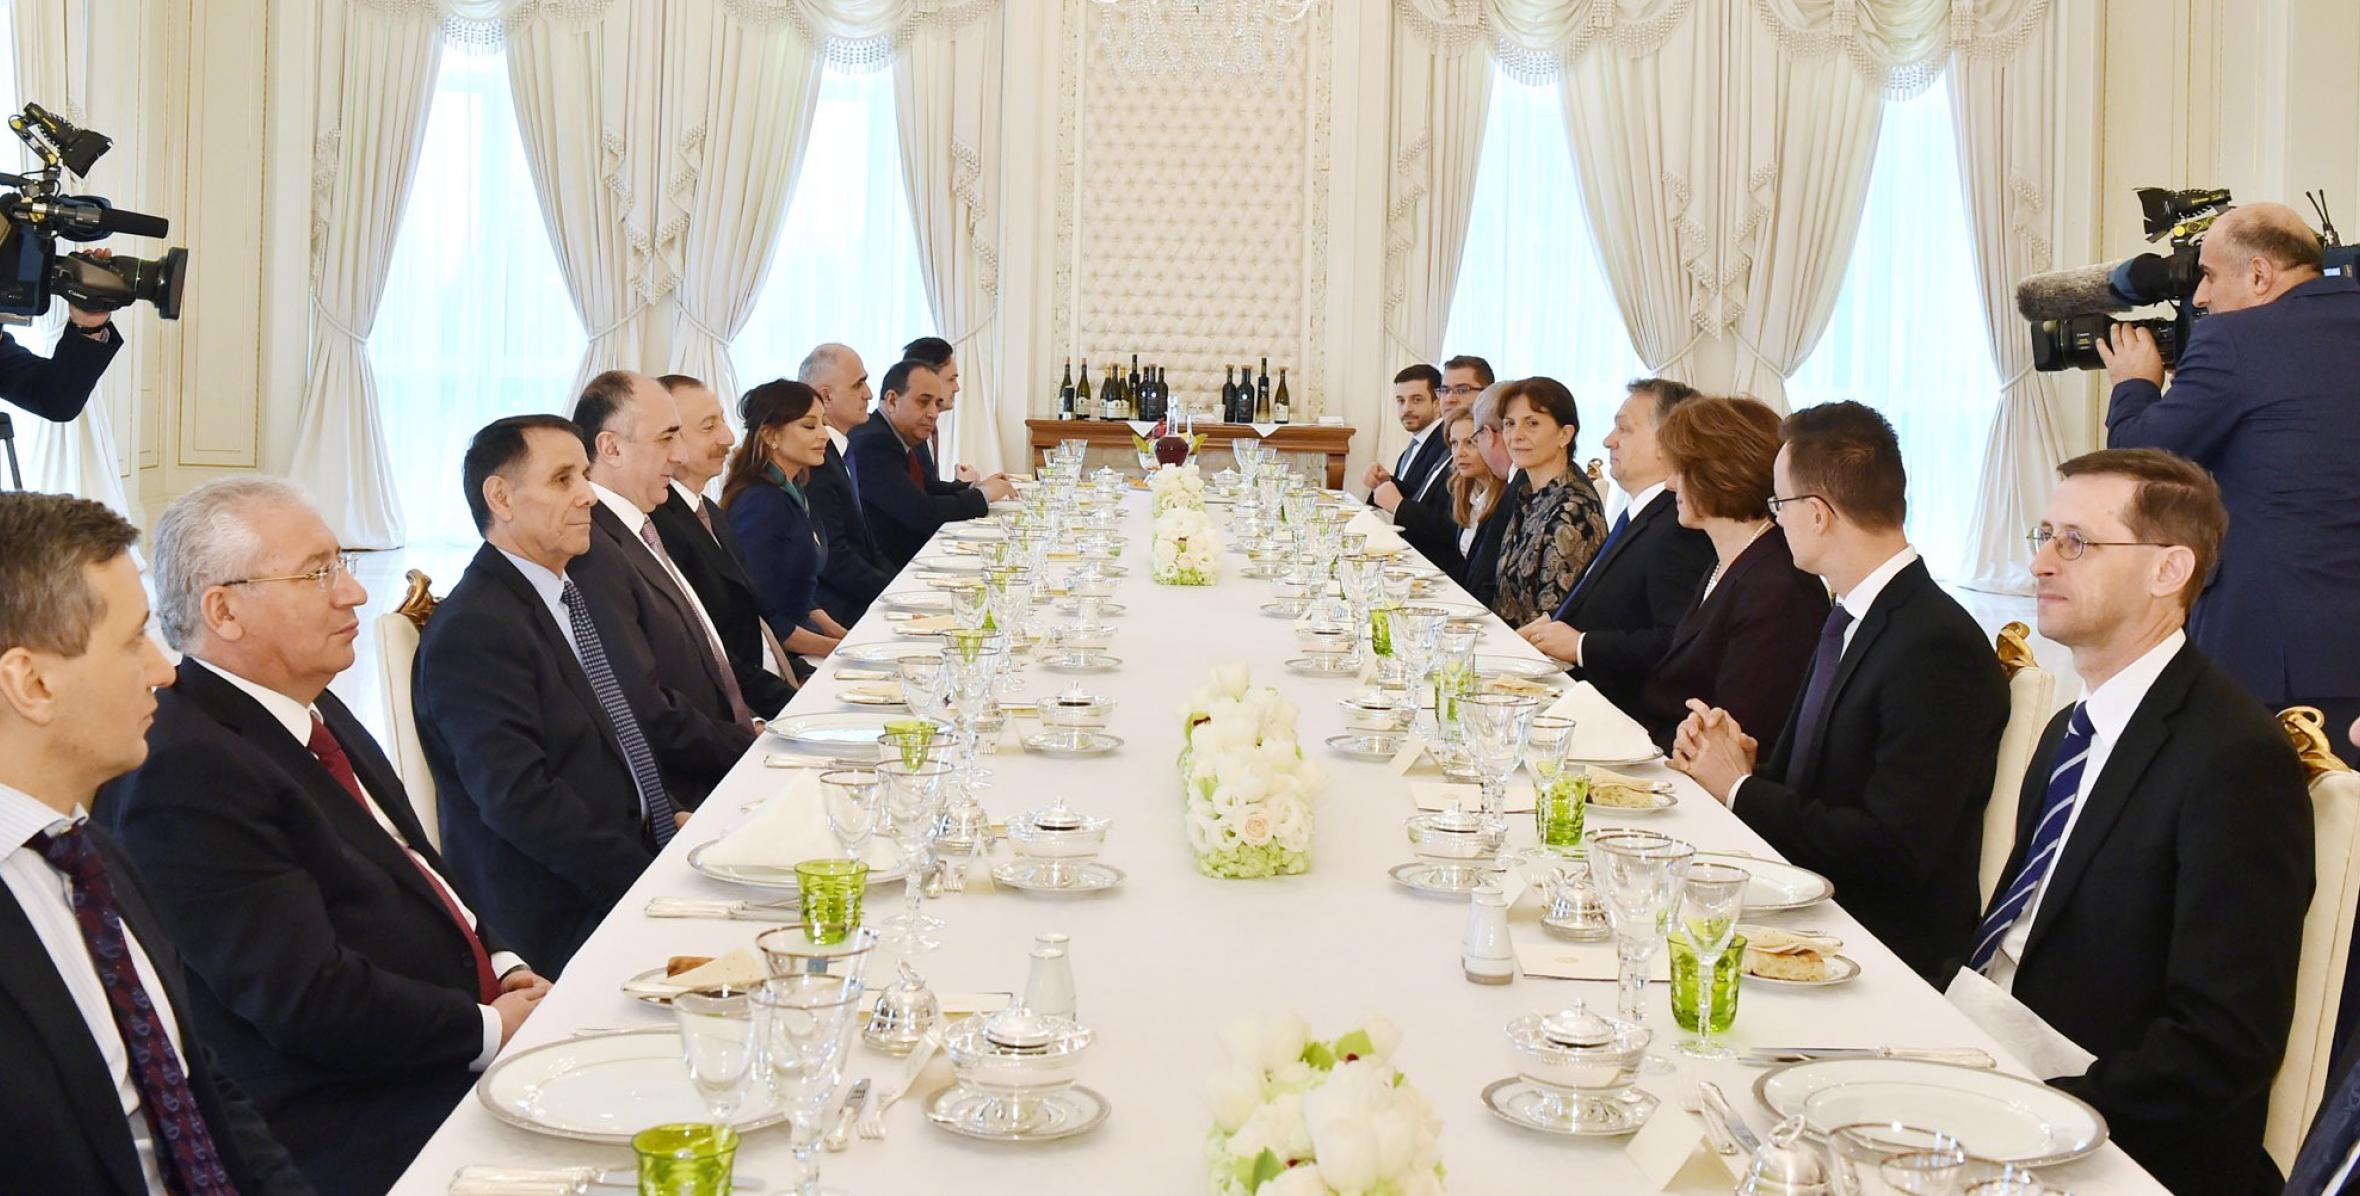 Ilham Aliyev hosted dinner reception in honor of Hungarian Prime Minister Viktor Orban